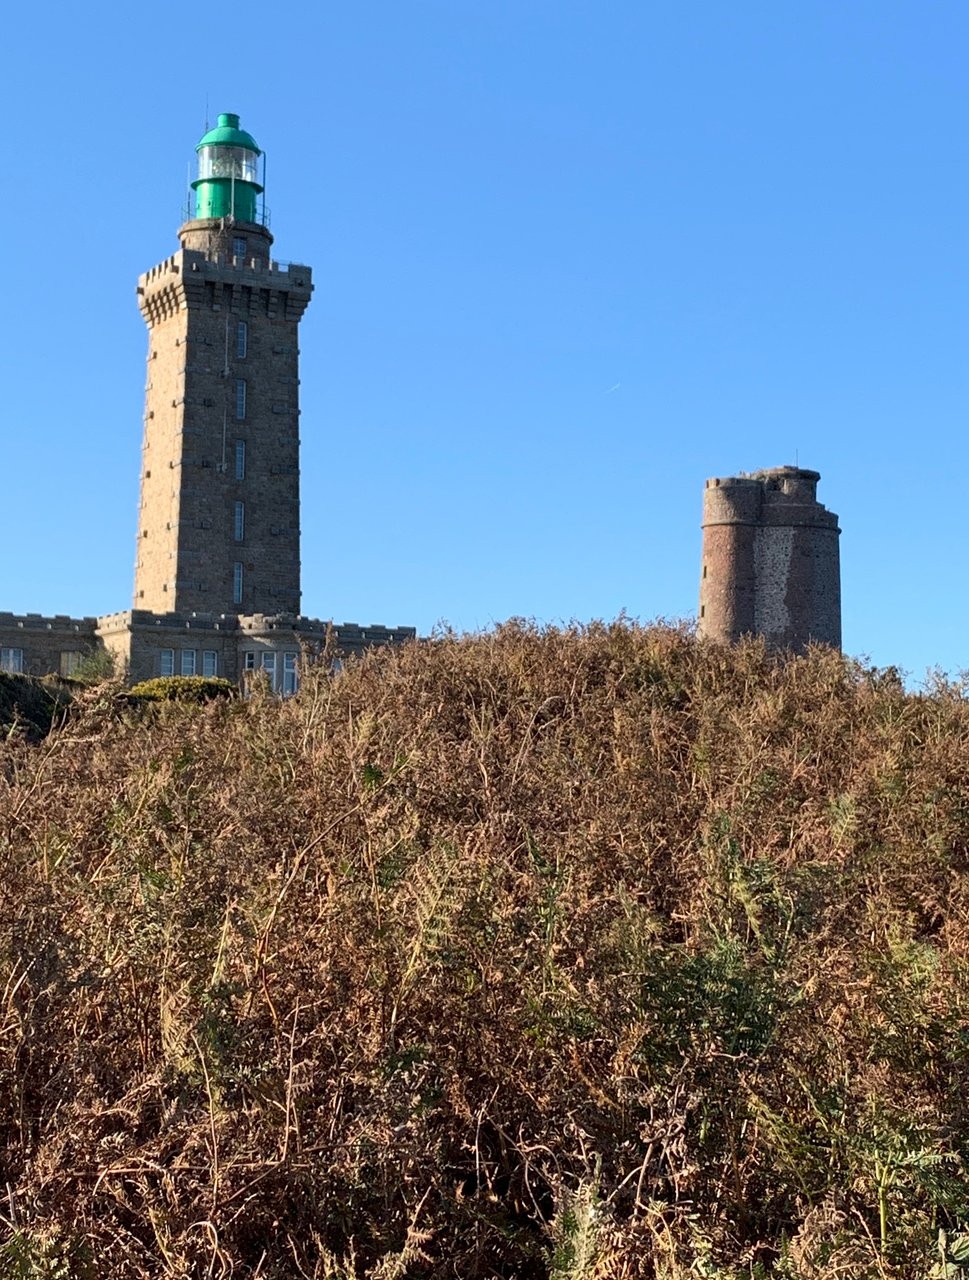 Cap Jardin Nouveau Cap Frehel Lighthouse Plevenon 2020 All You Need to Know